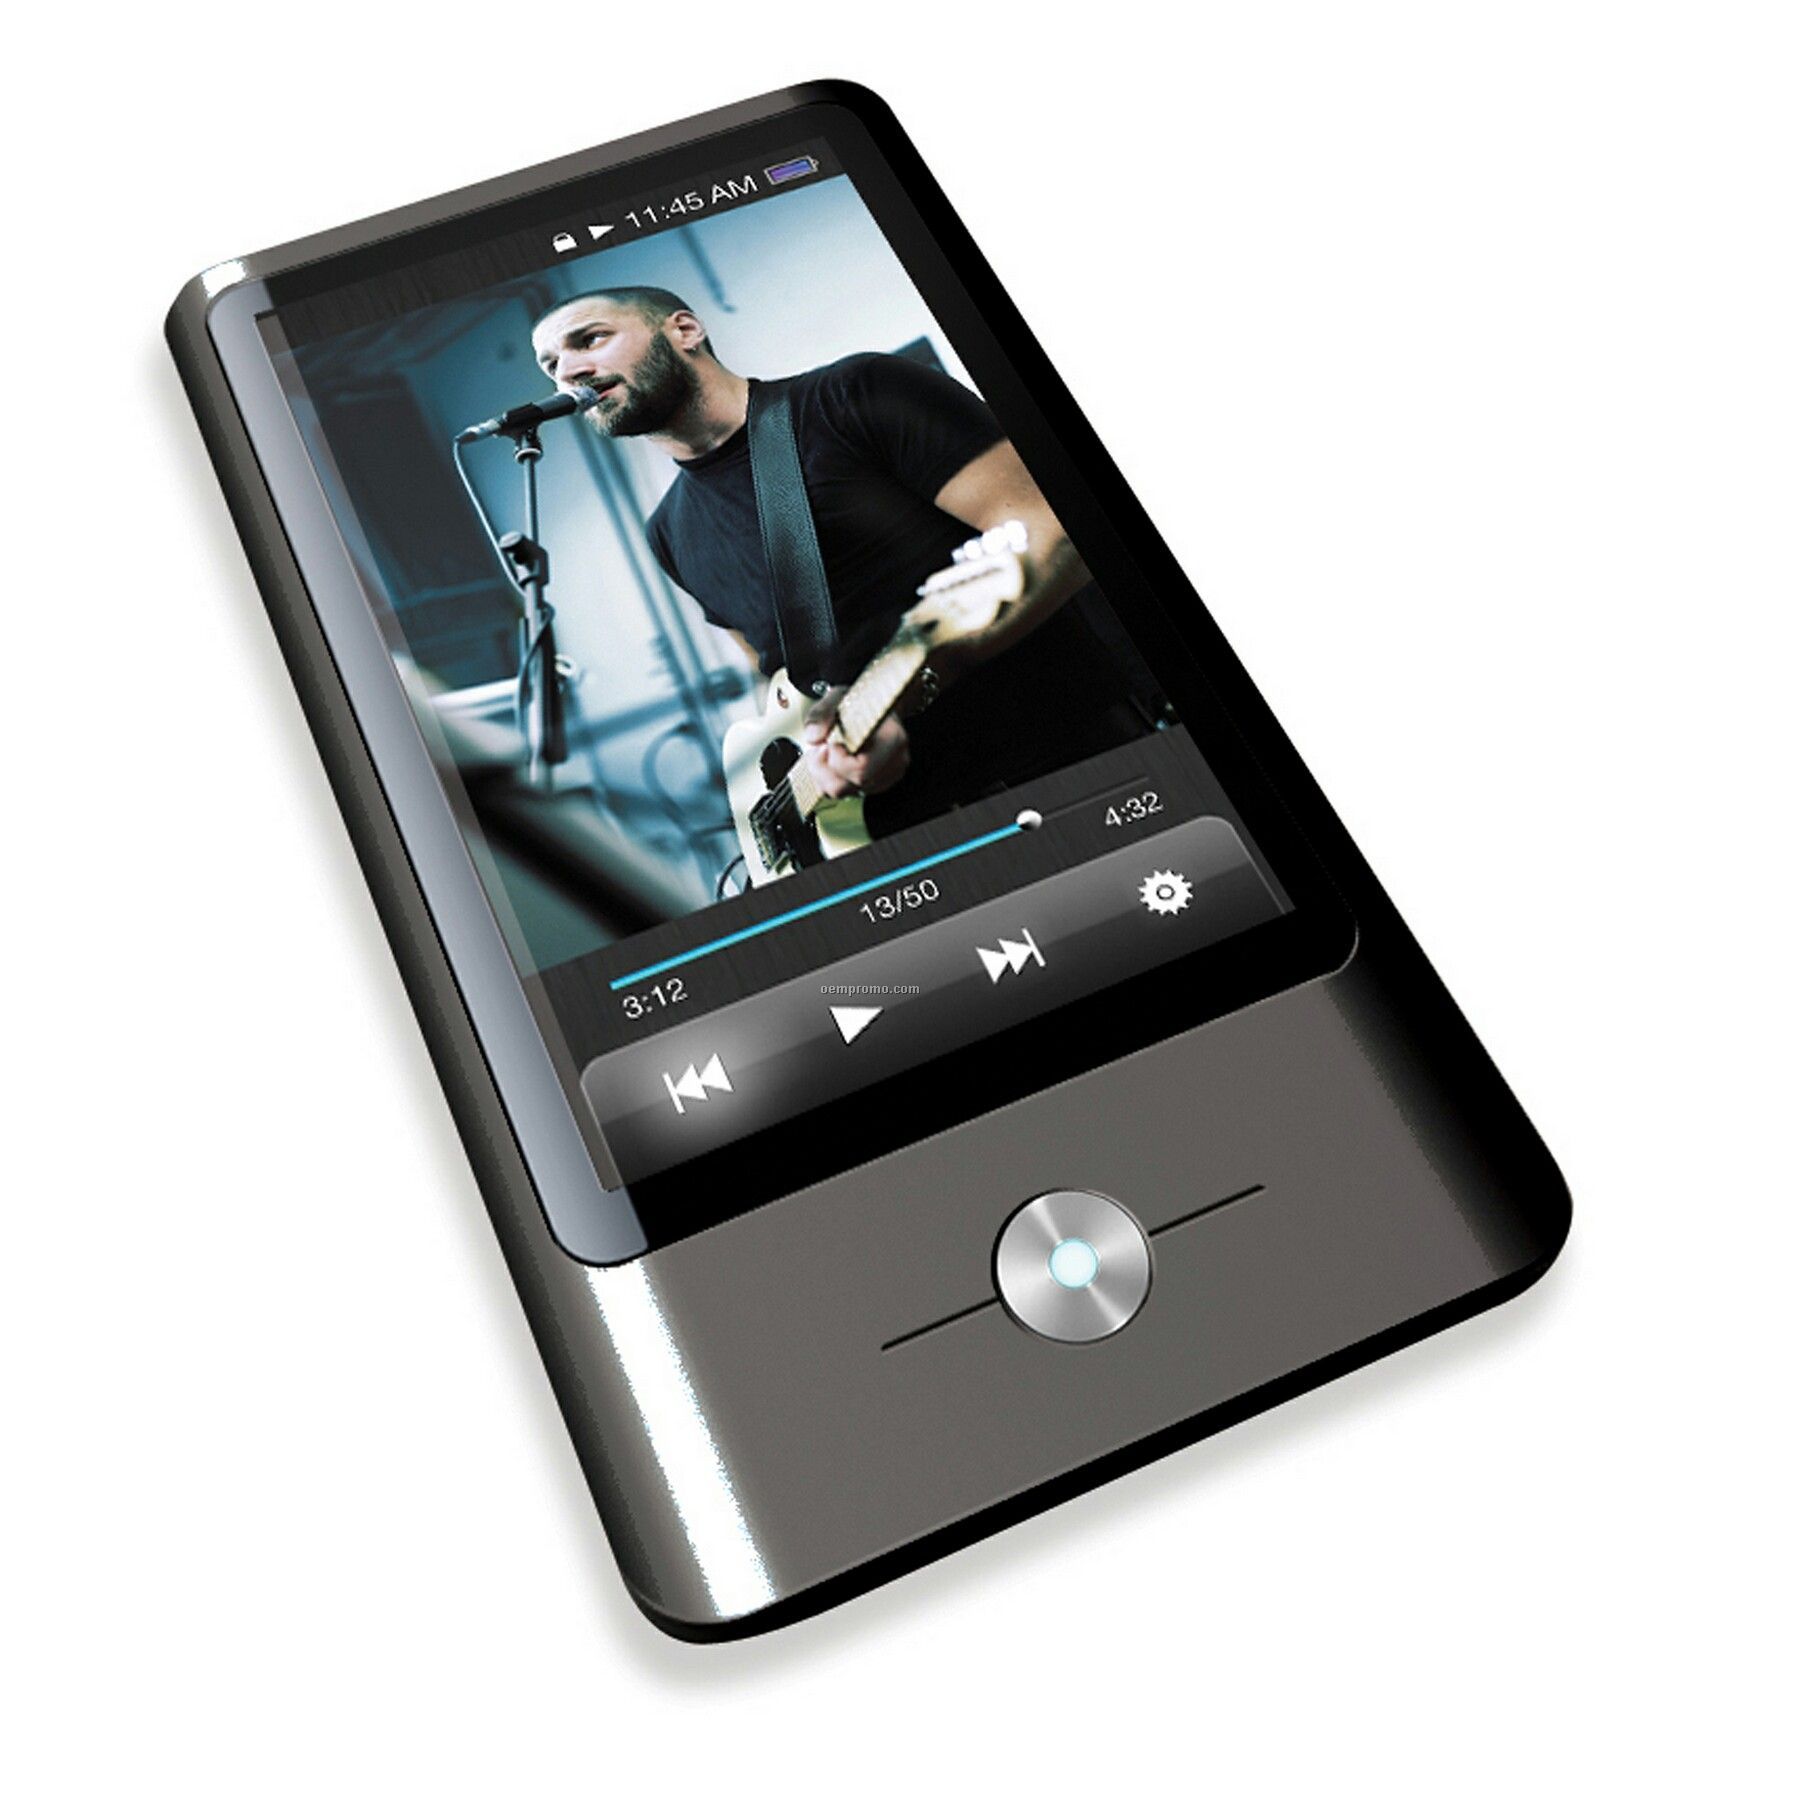 3" Touchscreen Video Mp3 Player